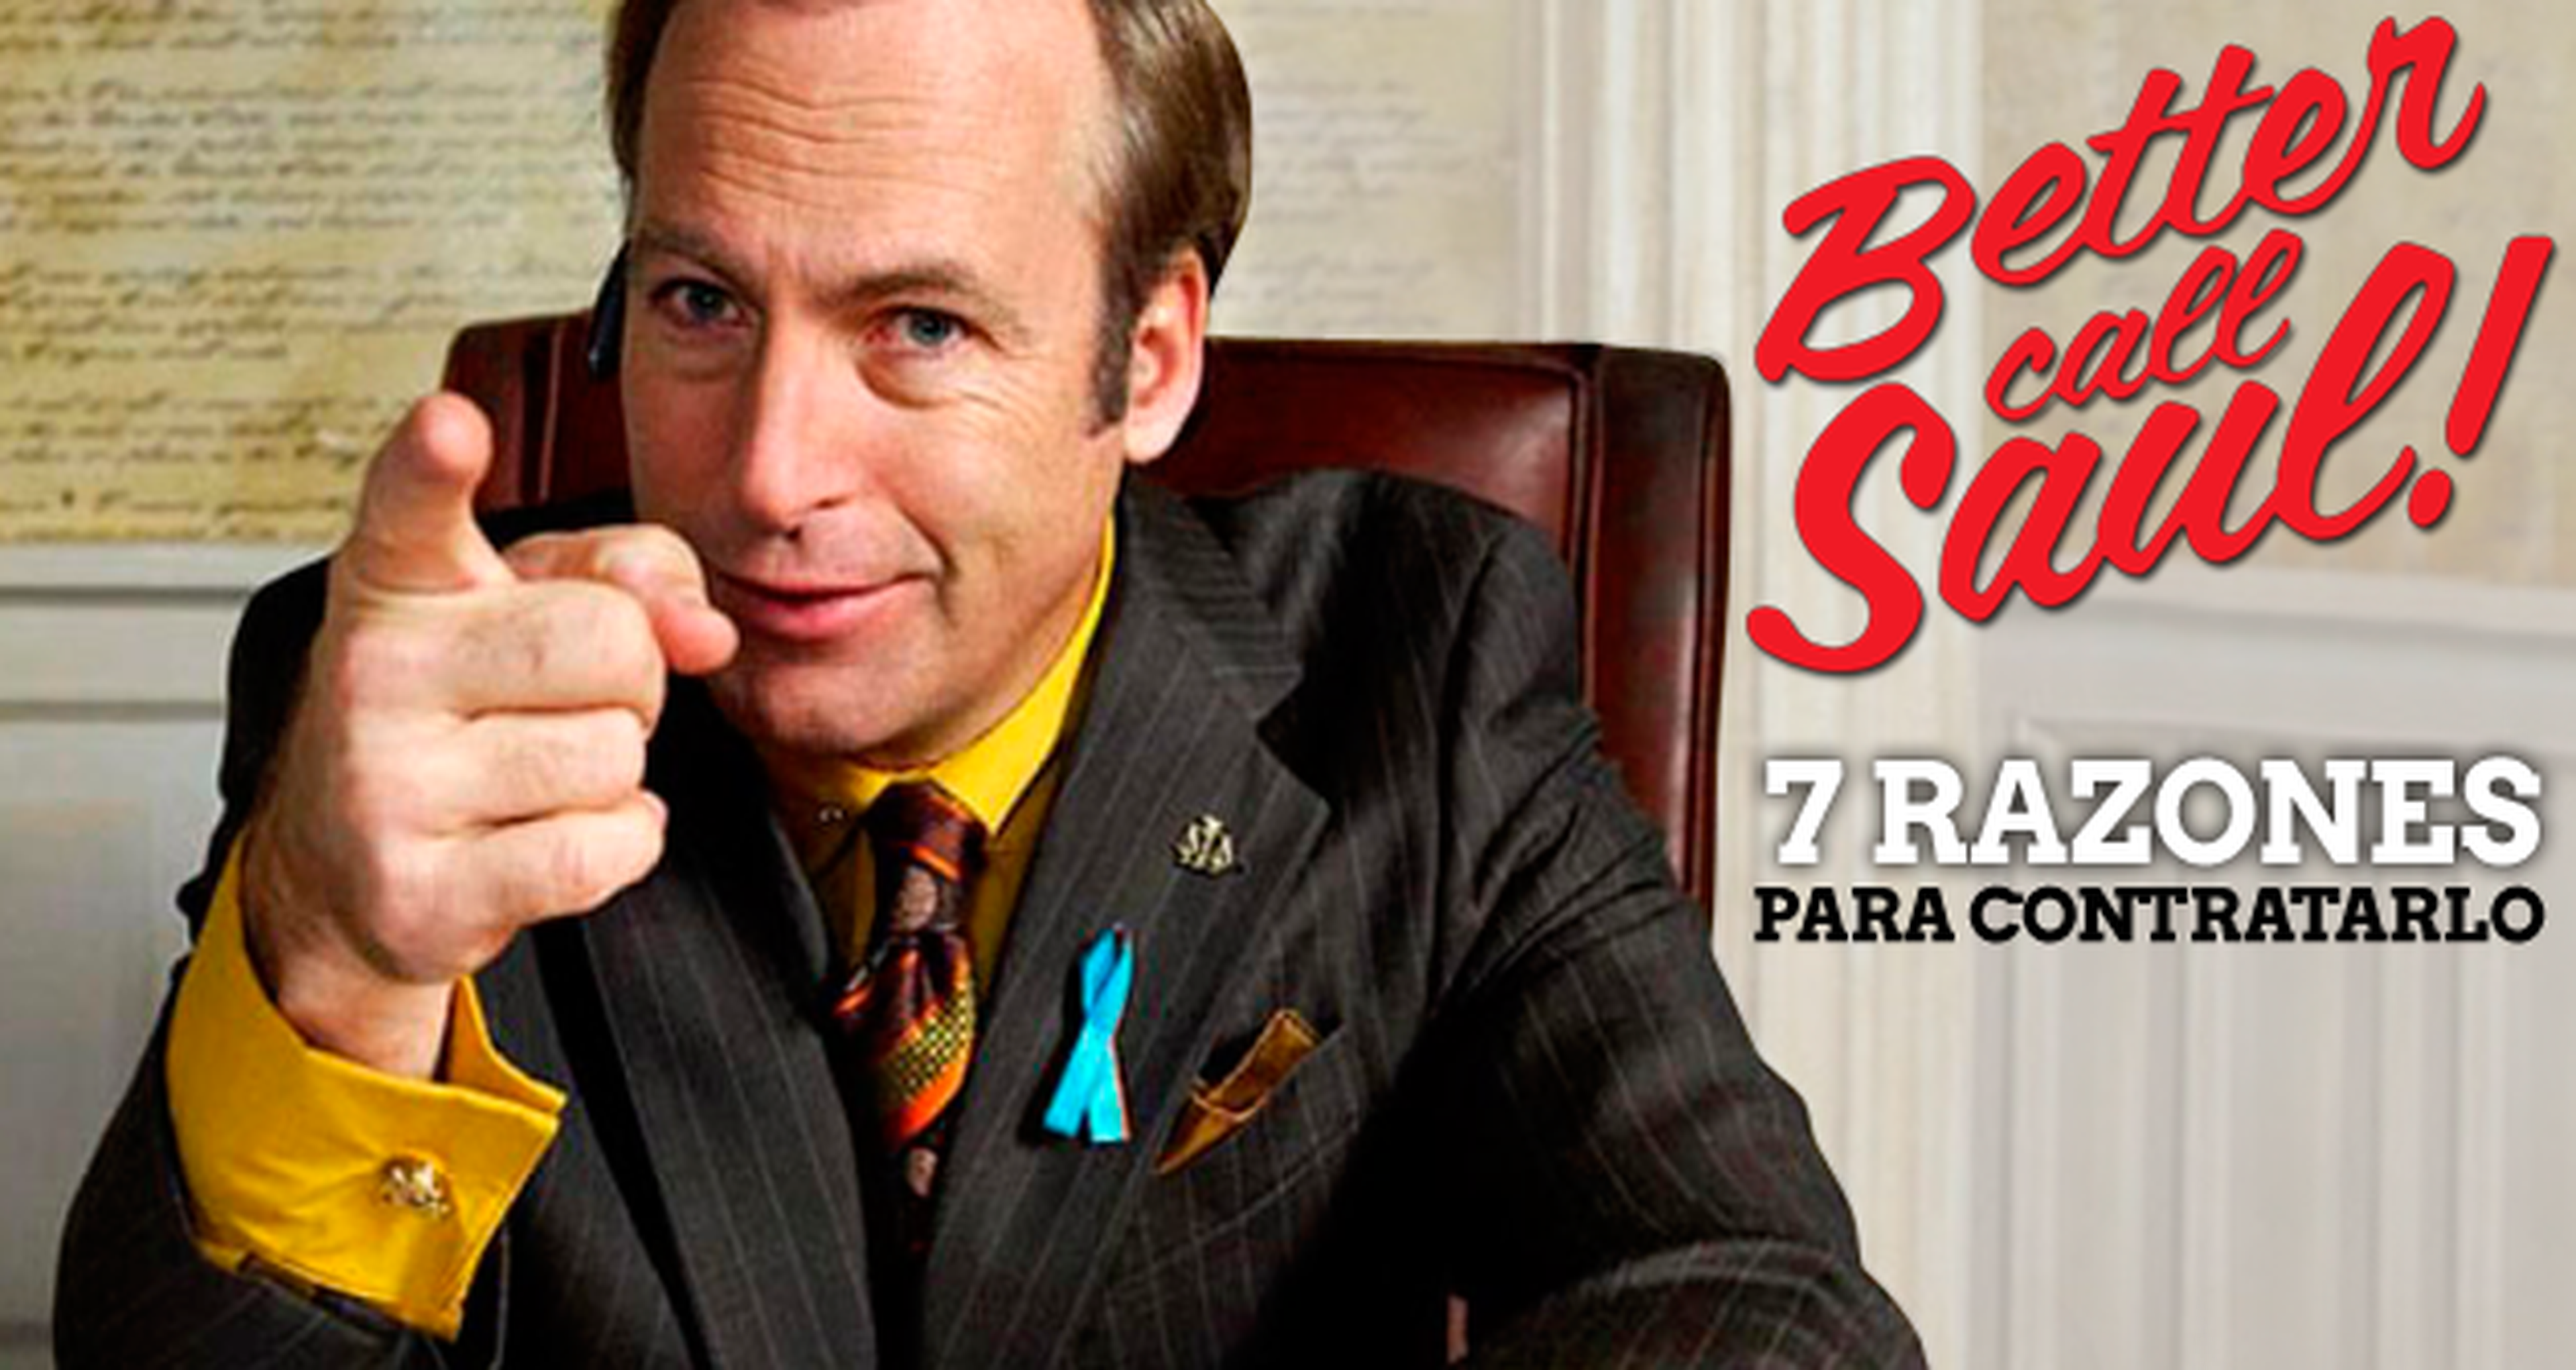 Reseñas de series: Better Call Saul. ¡7 razones para contratarlo!